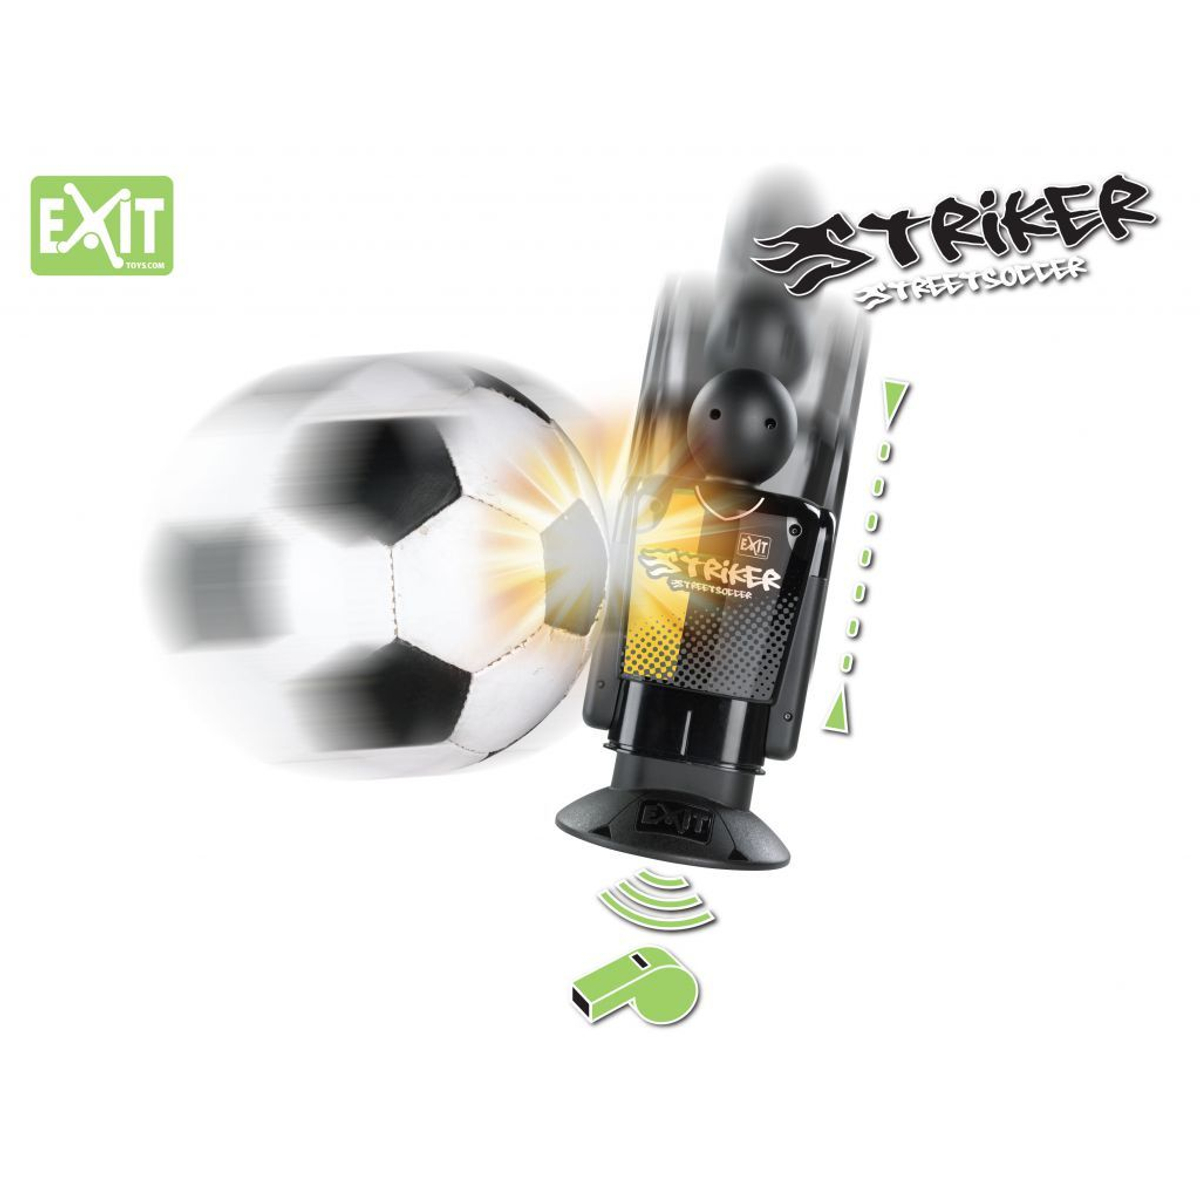 Exit Striker Streetsoccer - Set van 10